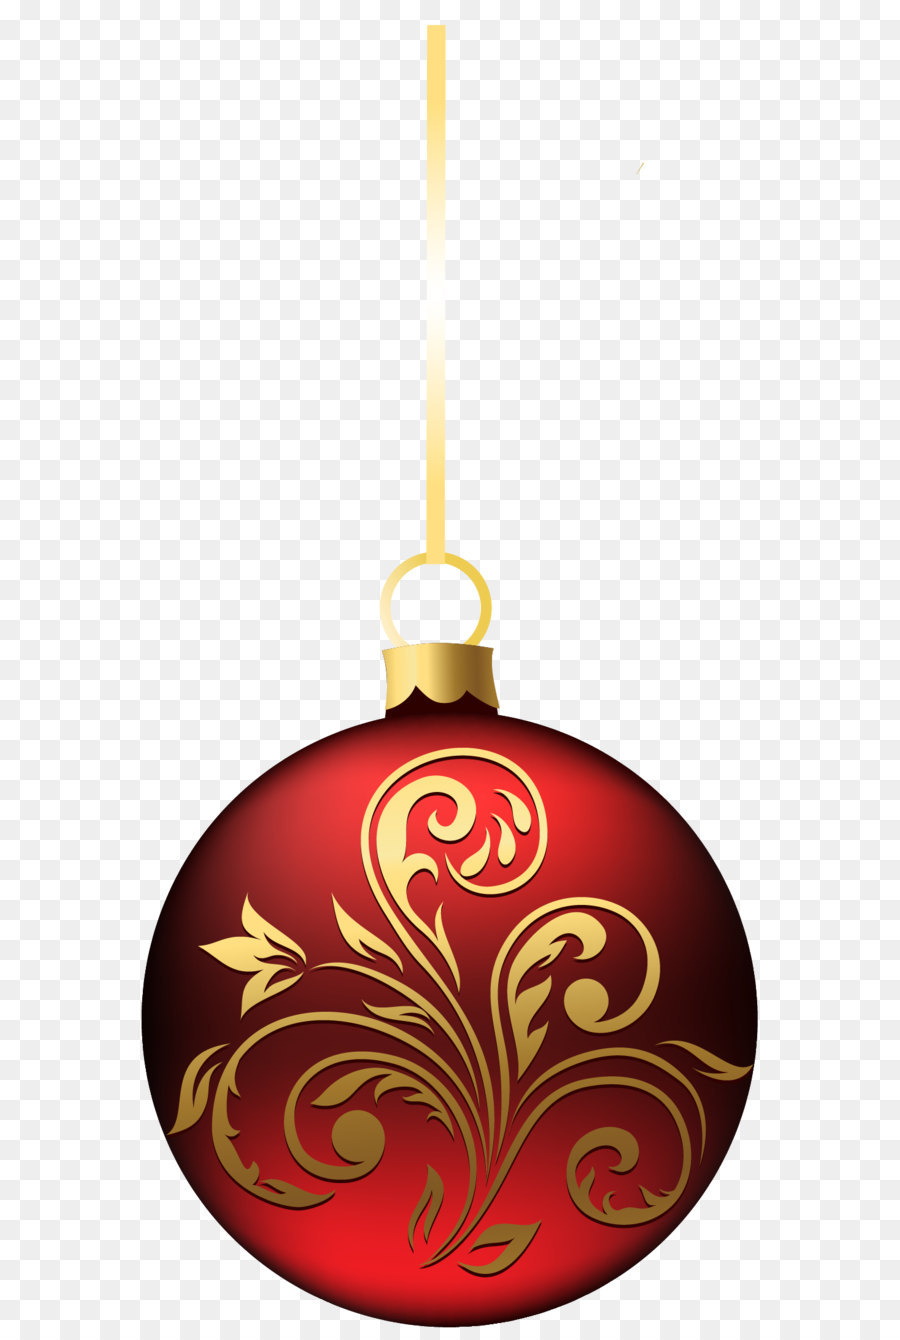 Christmas ornament Christmas decoration Clip art - Large Transparent BlueRed Christmas Ball Ornament PNG Clipart png download - 1059*2181 - Free Transparent Christmas Ornament png Download.